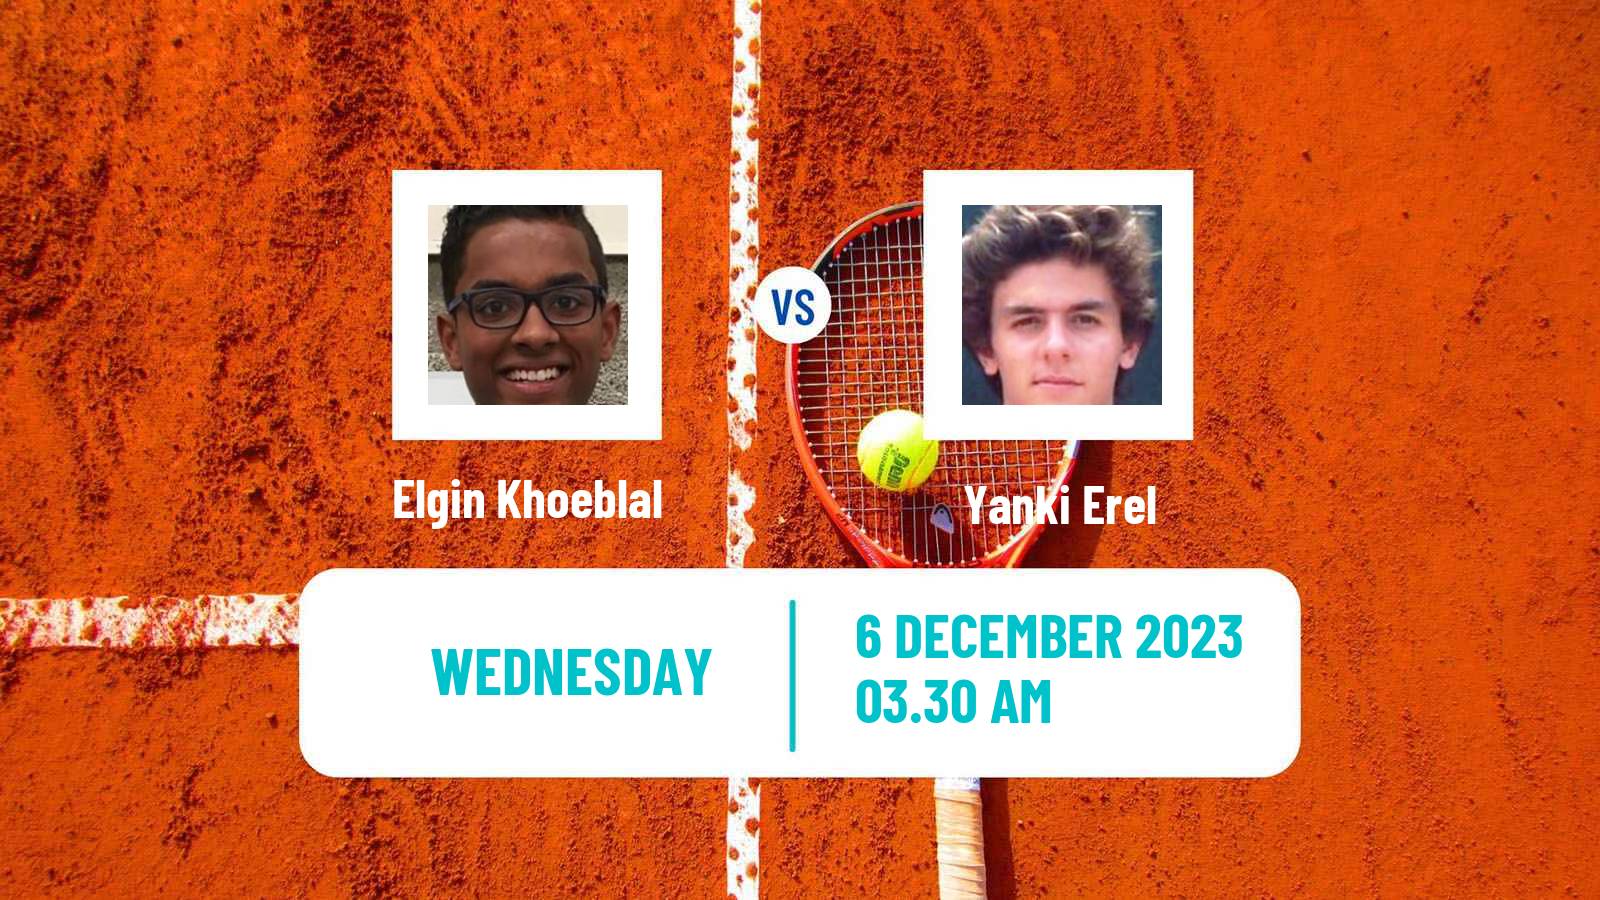 Tennis ITF M15 Zahra 2 Men 2023 Elgin Khoeblal - Yanki Erel